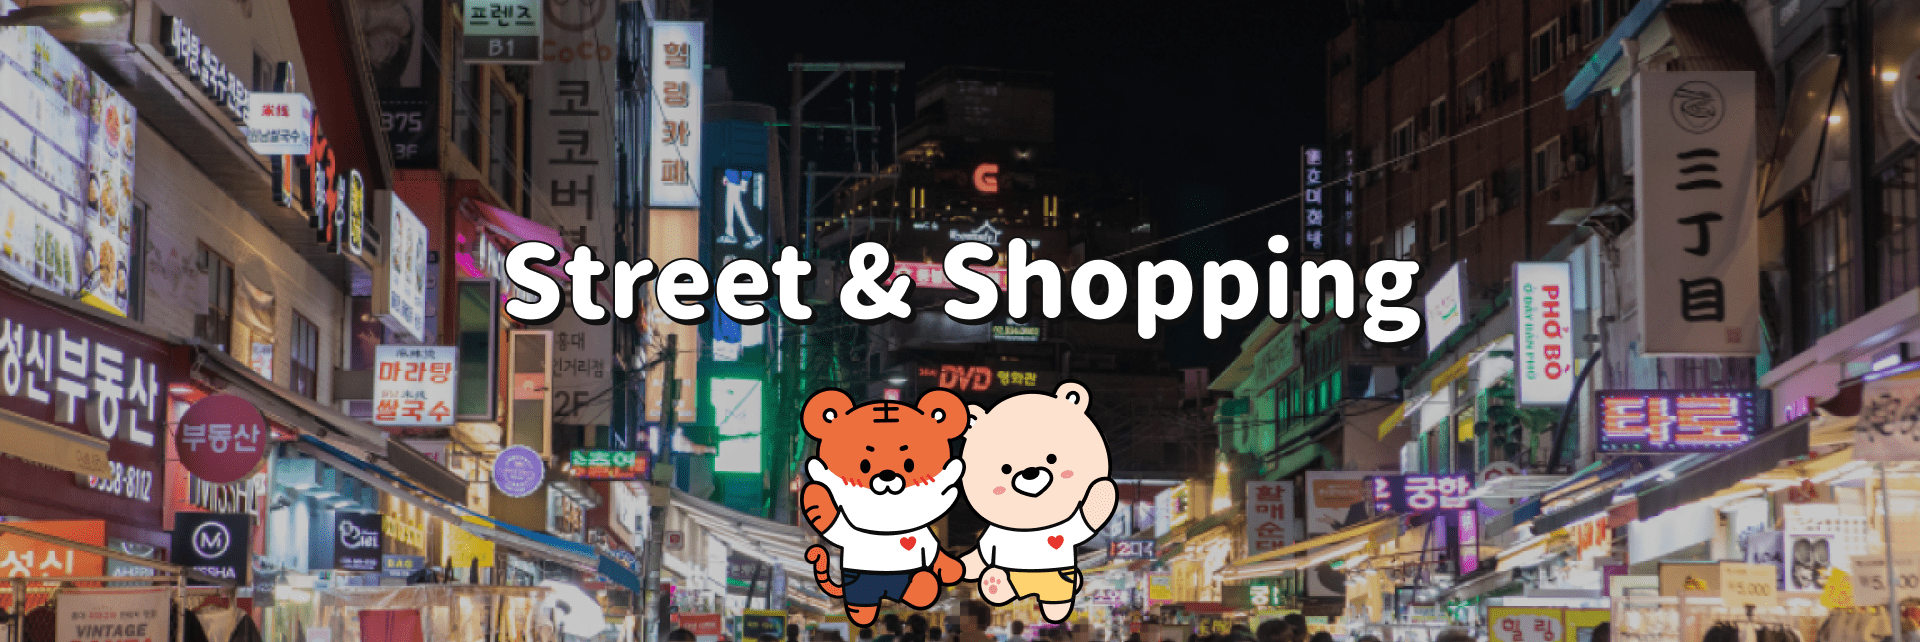 Street & Shopping